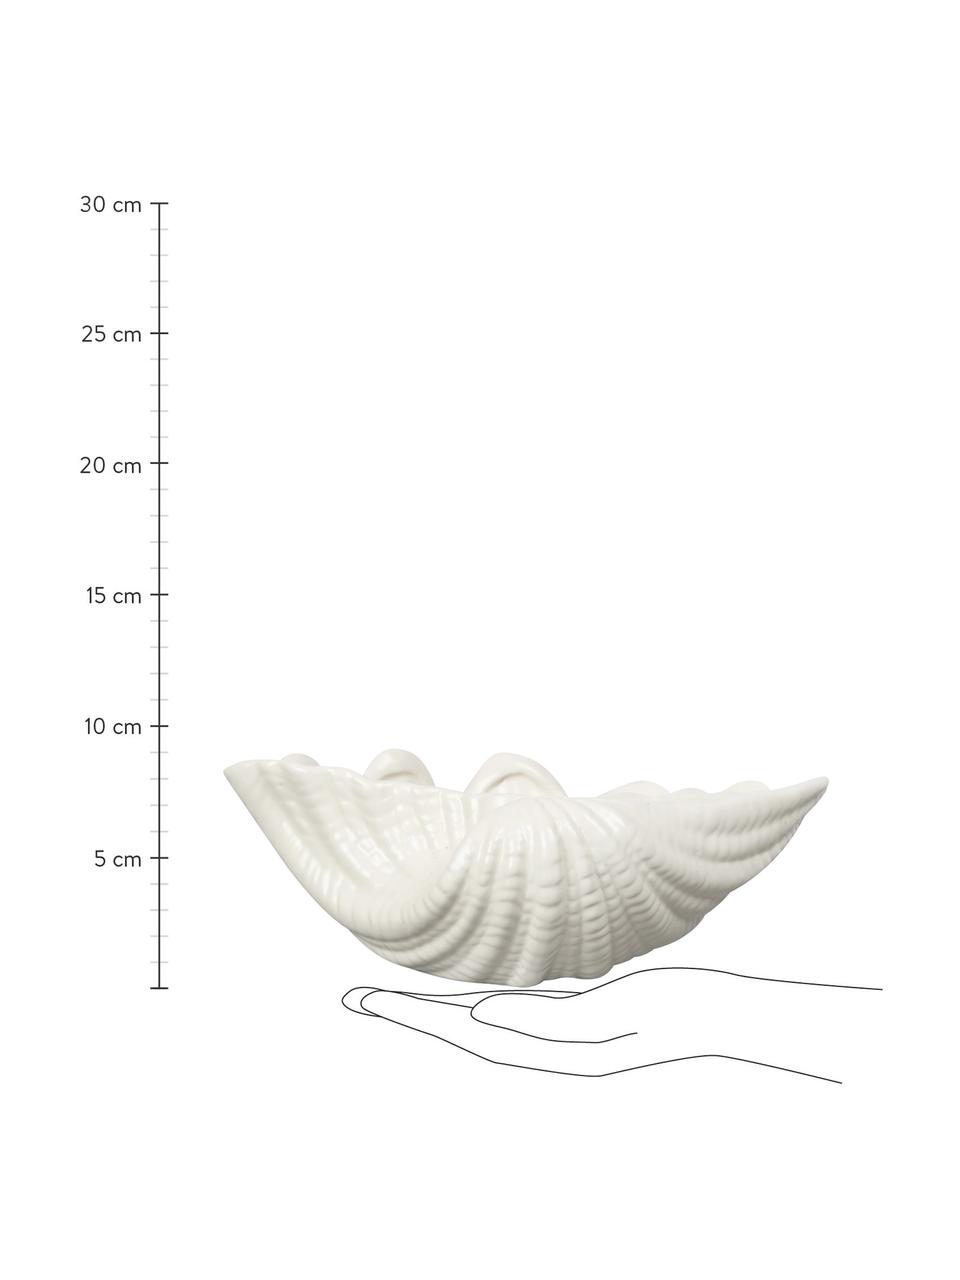 Ciotola in dolomite bianca Shell, larg. 24 cm, Dolomite, Bianco, Larg. 23 x Alt. 8 cm